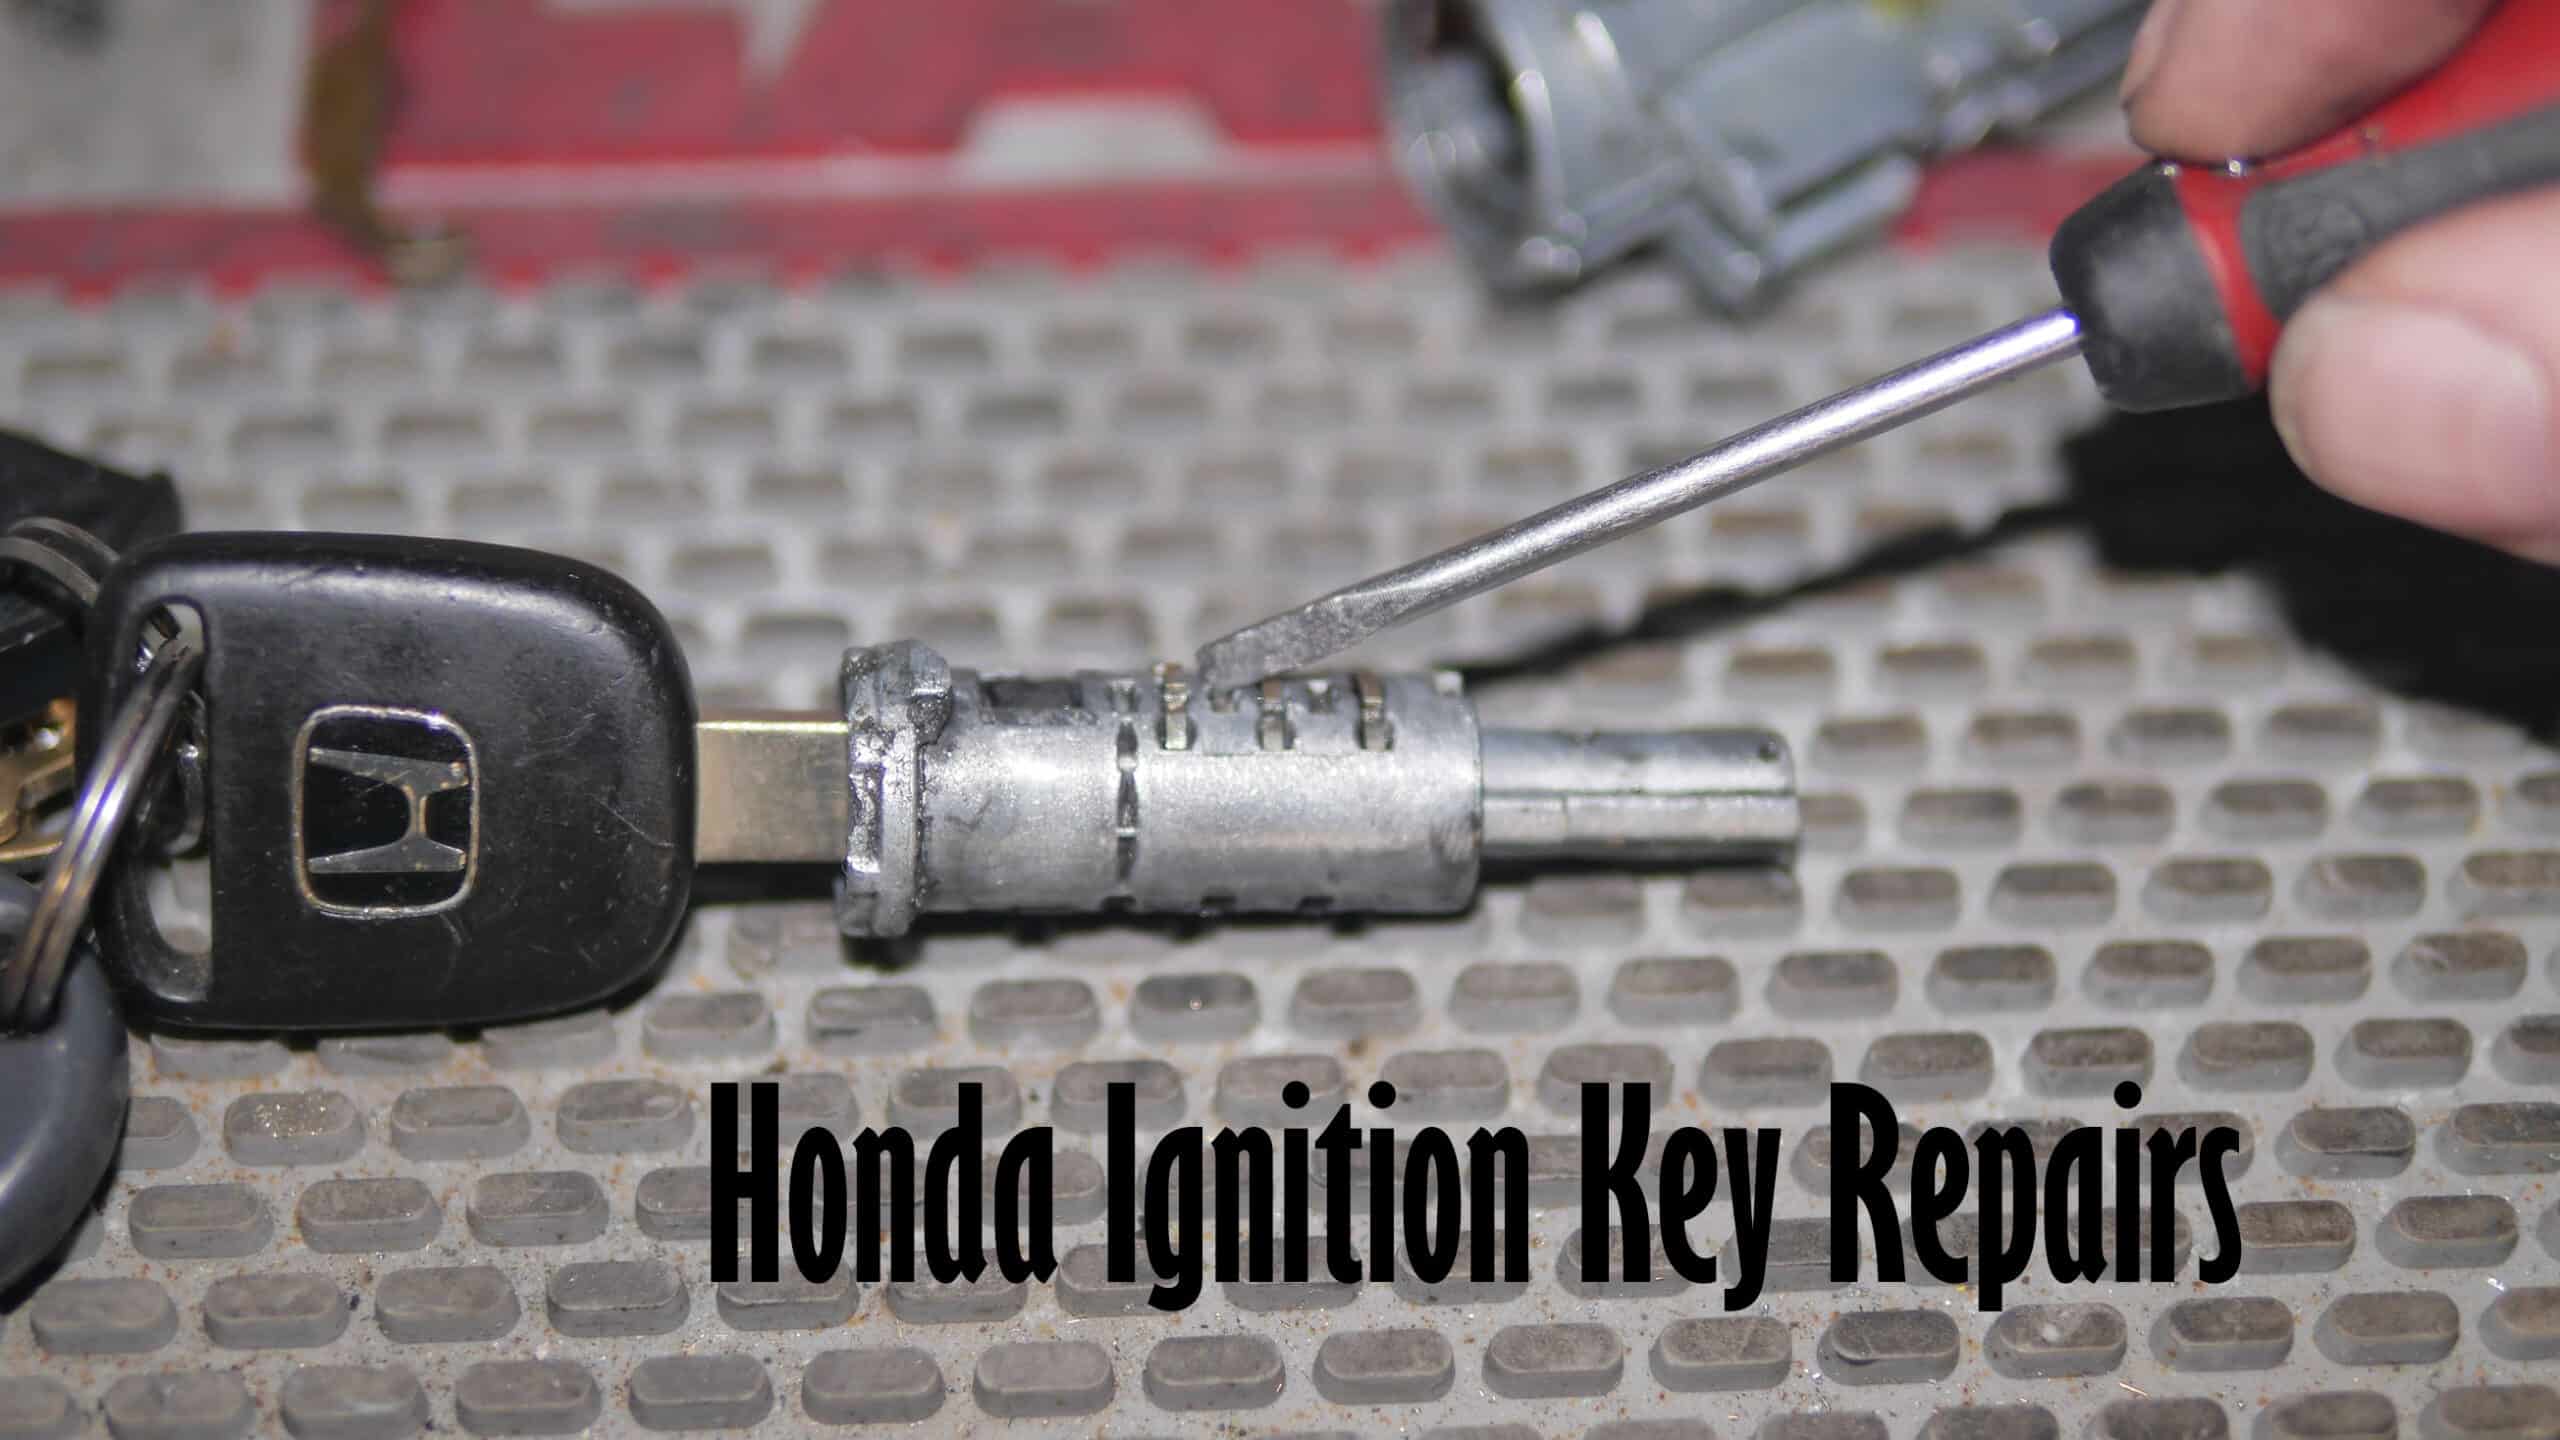 Honda Ignition Key Repairs